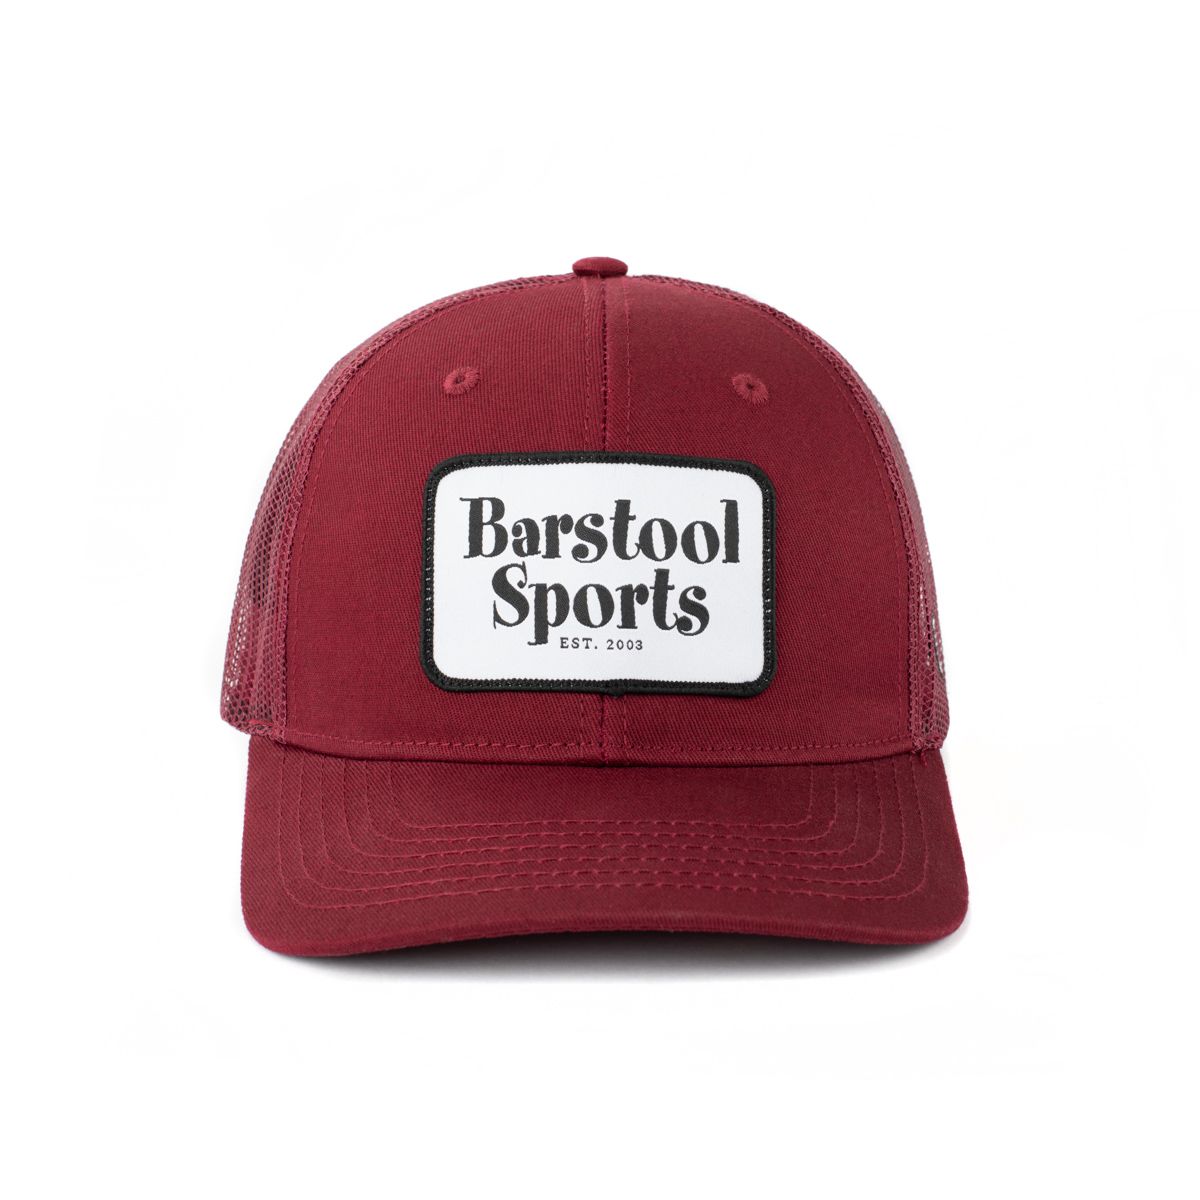 Barstool Sports Common Man Trucker Hat-Hats-Barstool Sports-Maroon-One Size-Barstool Sports